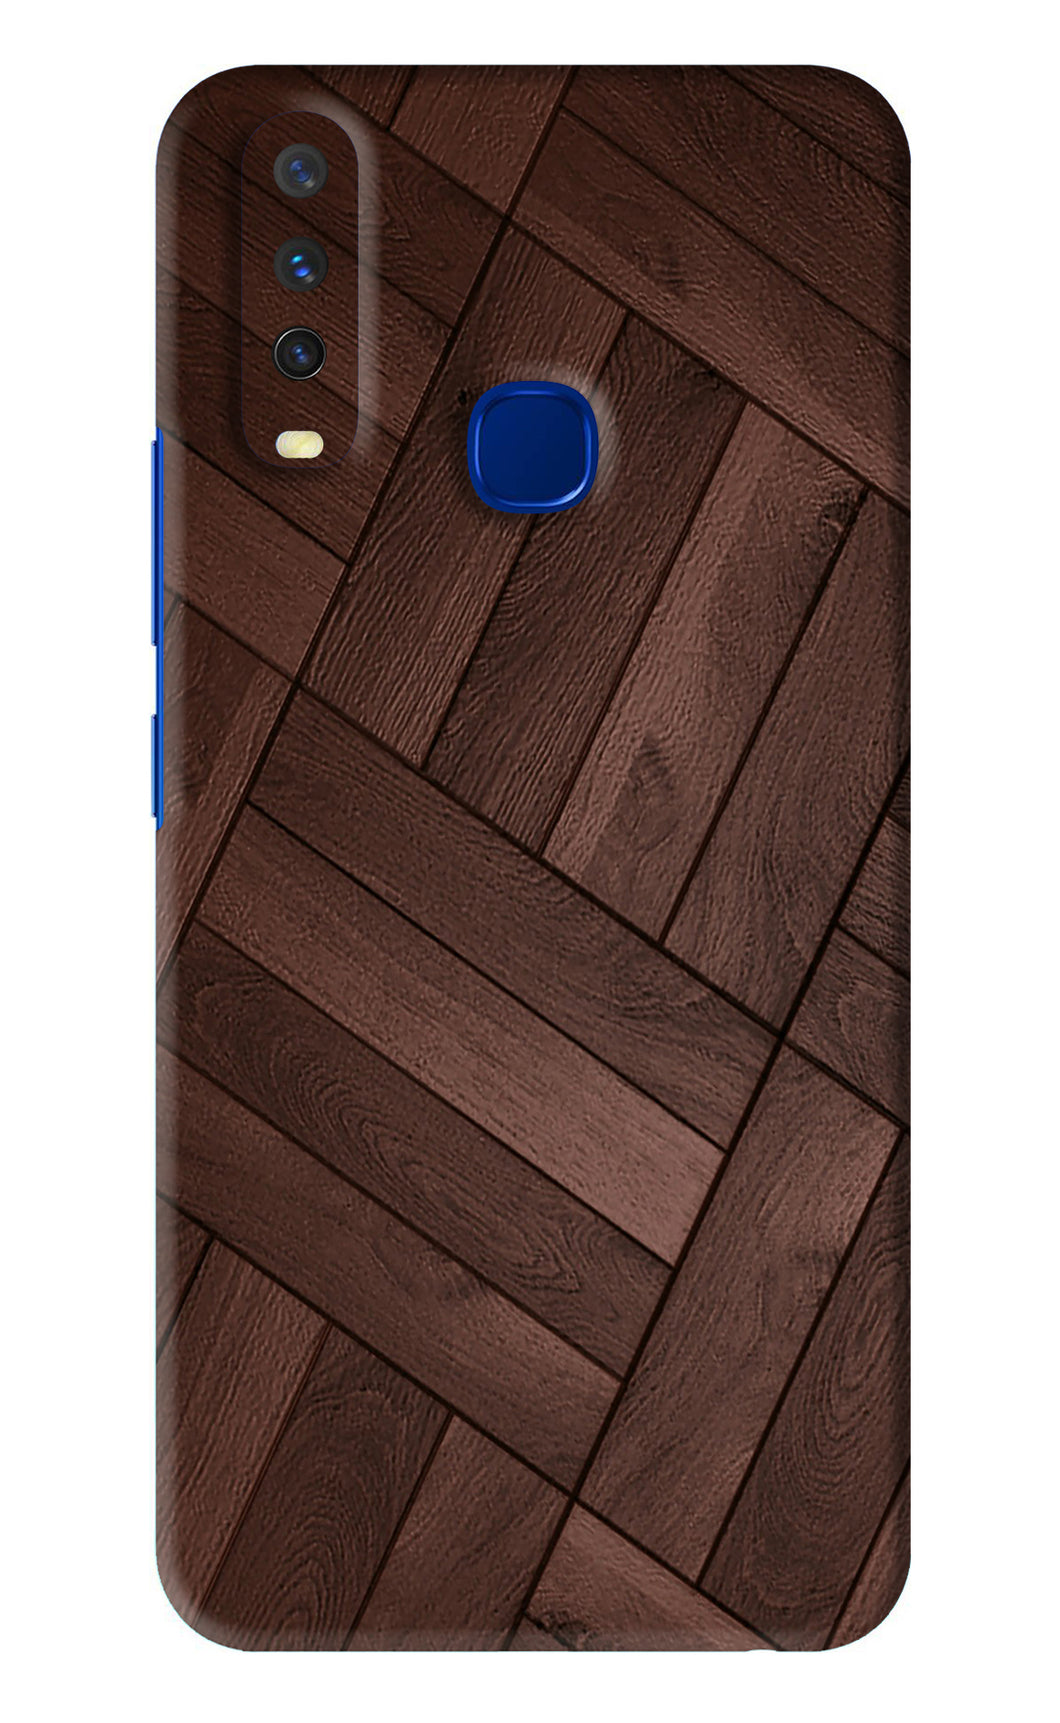 Wooden Texture Design Vivo Y15 2019 Back Skin Wrap